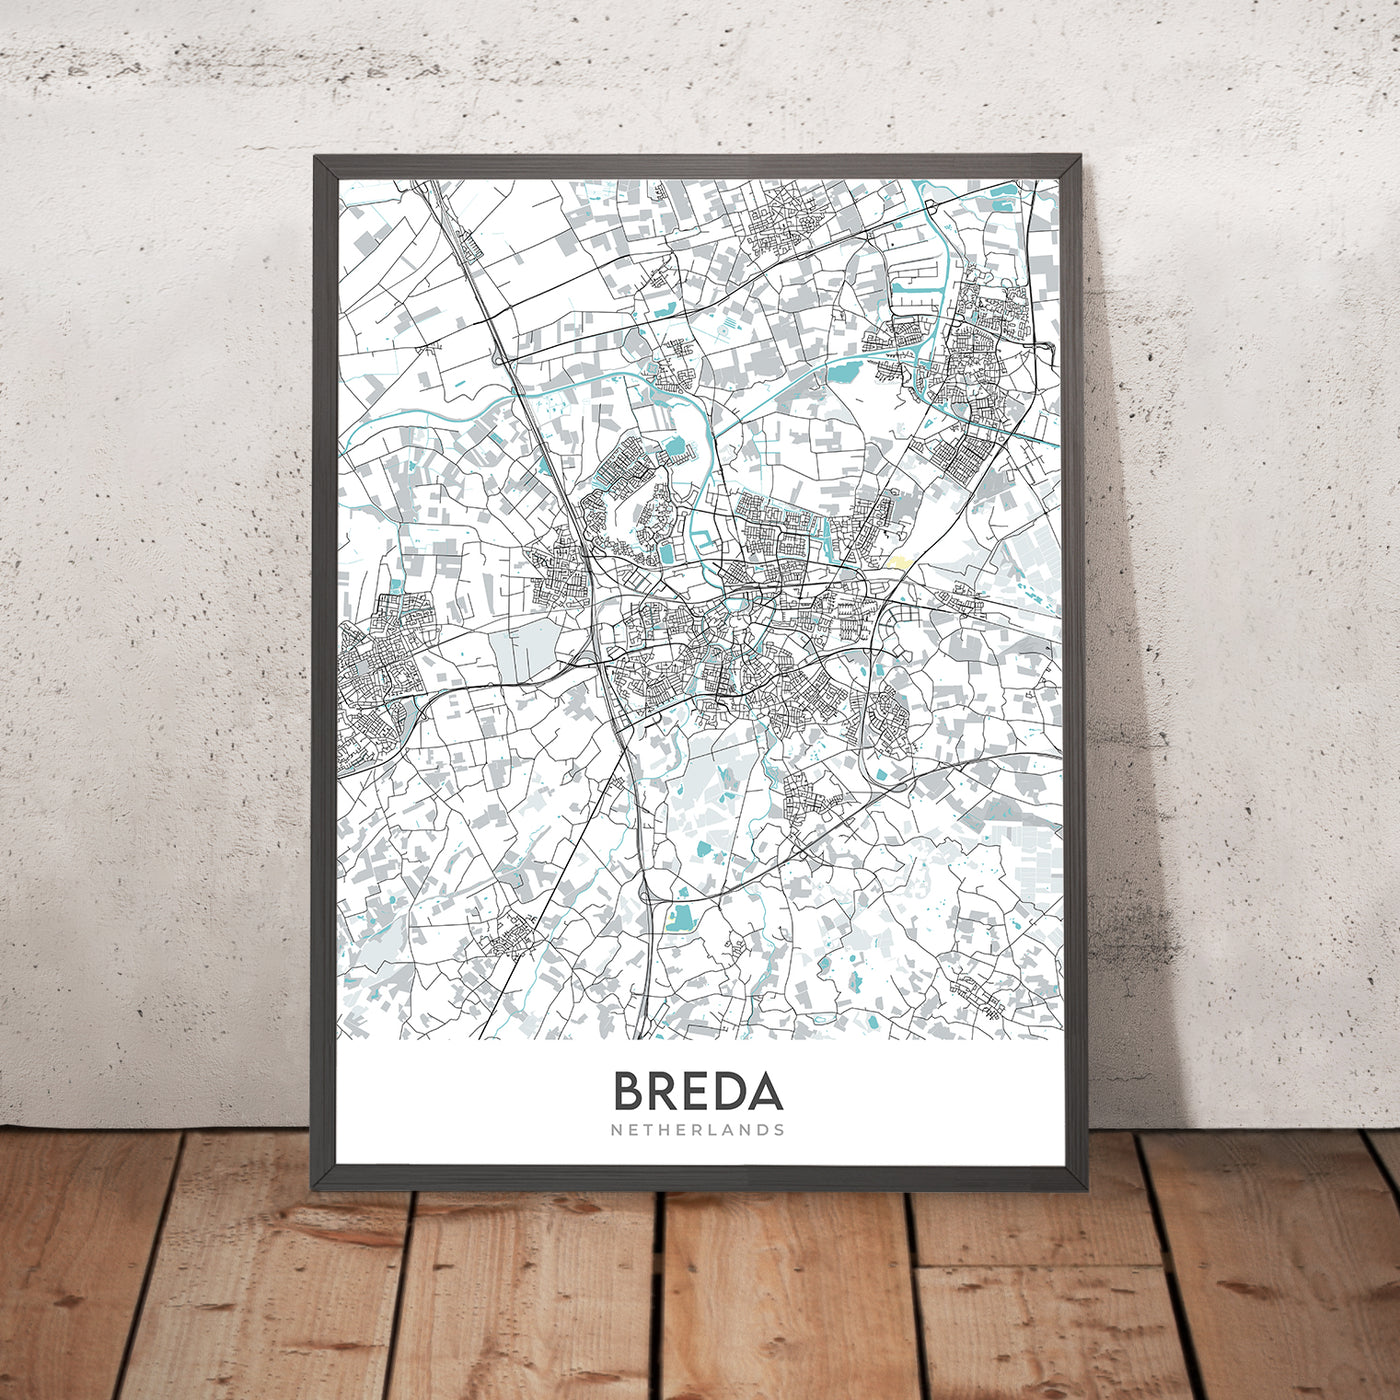 Moderner Stadtplan von Breda, Niederlande: Grote Kerk, Kasteel van Breda, Stedelijk Museum Breda, A16, A27